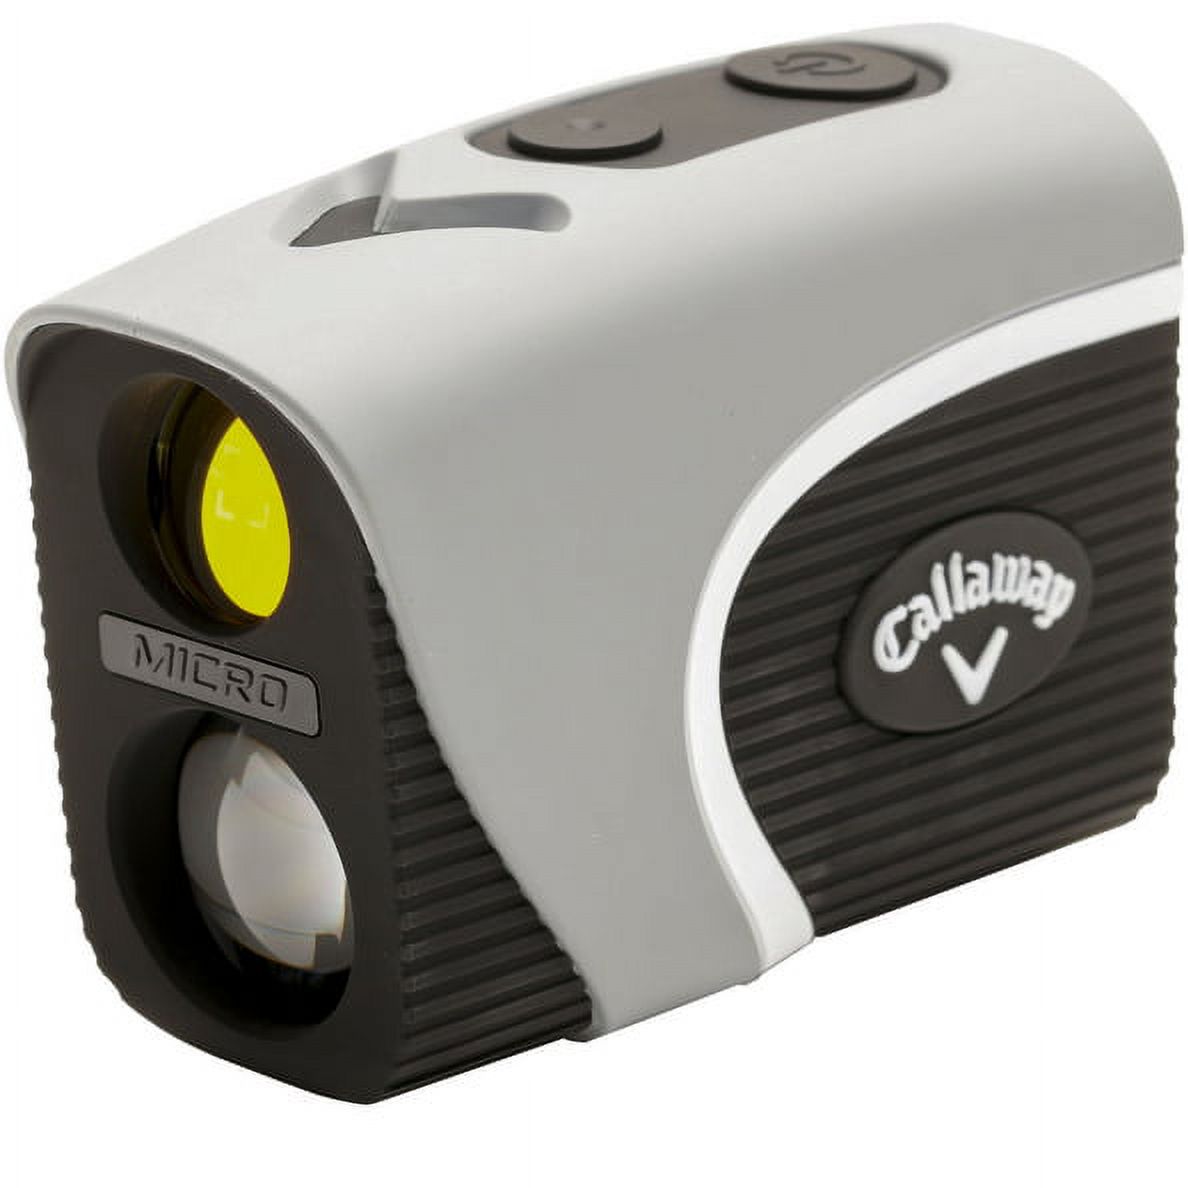 Callaway Micro Prism-Laser Golf Rangefinder - image 1 of 2